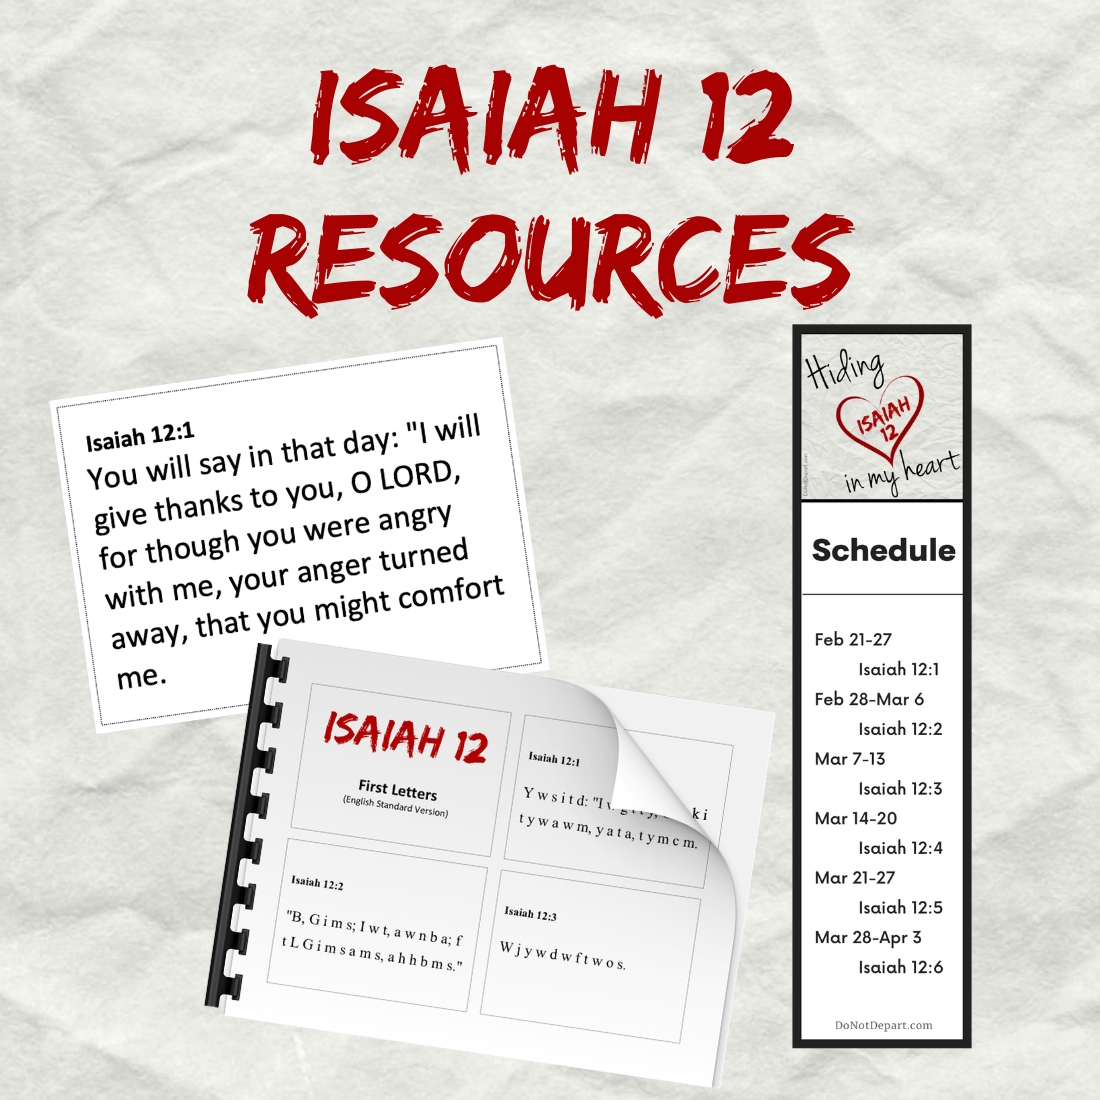 Isaiah 12 Resources 2021